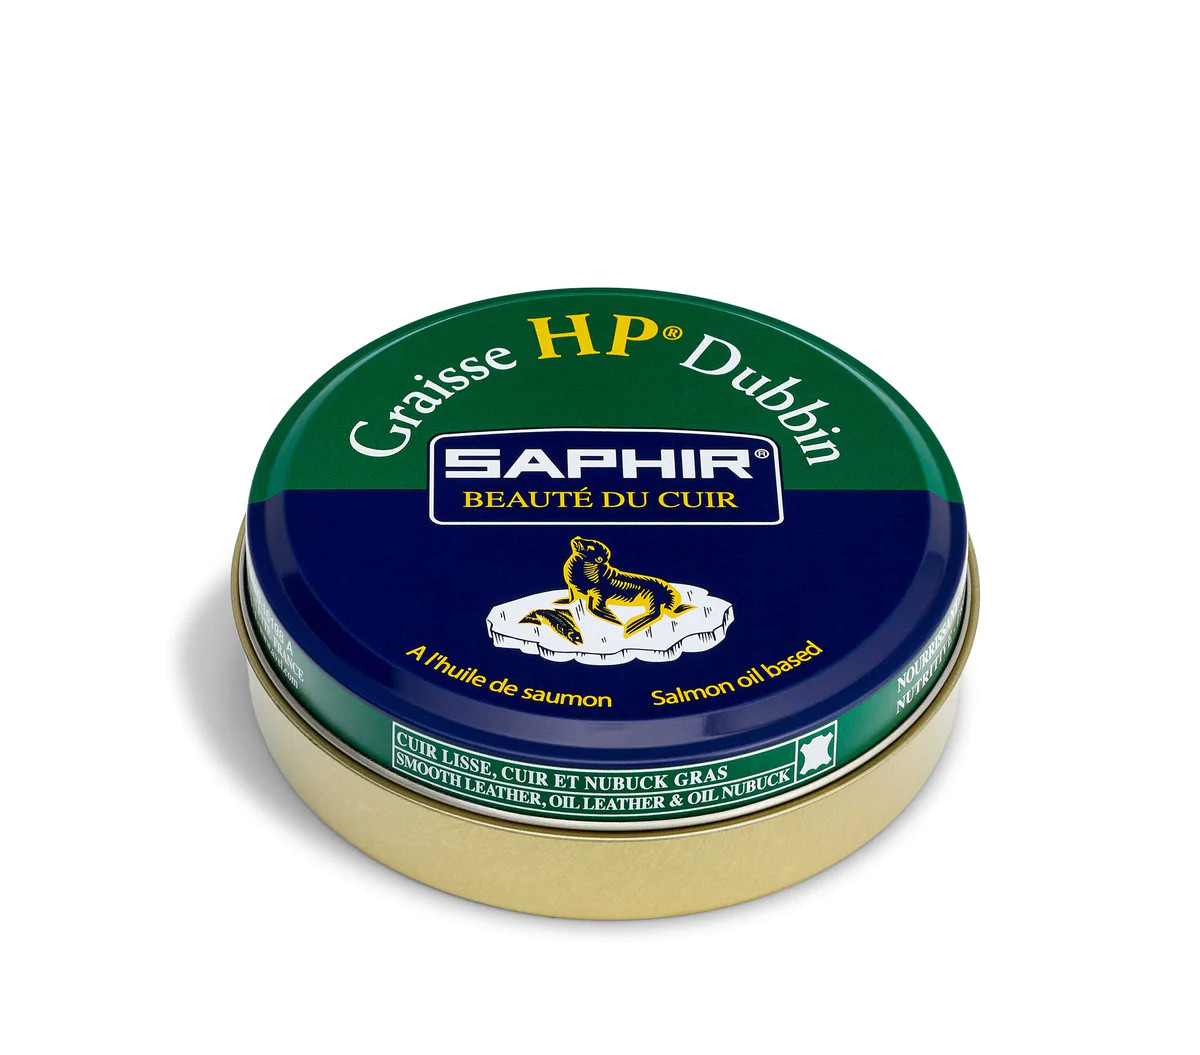  Saphir Grease HP Dubbin – Waterproof Leather Shoe Care